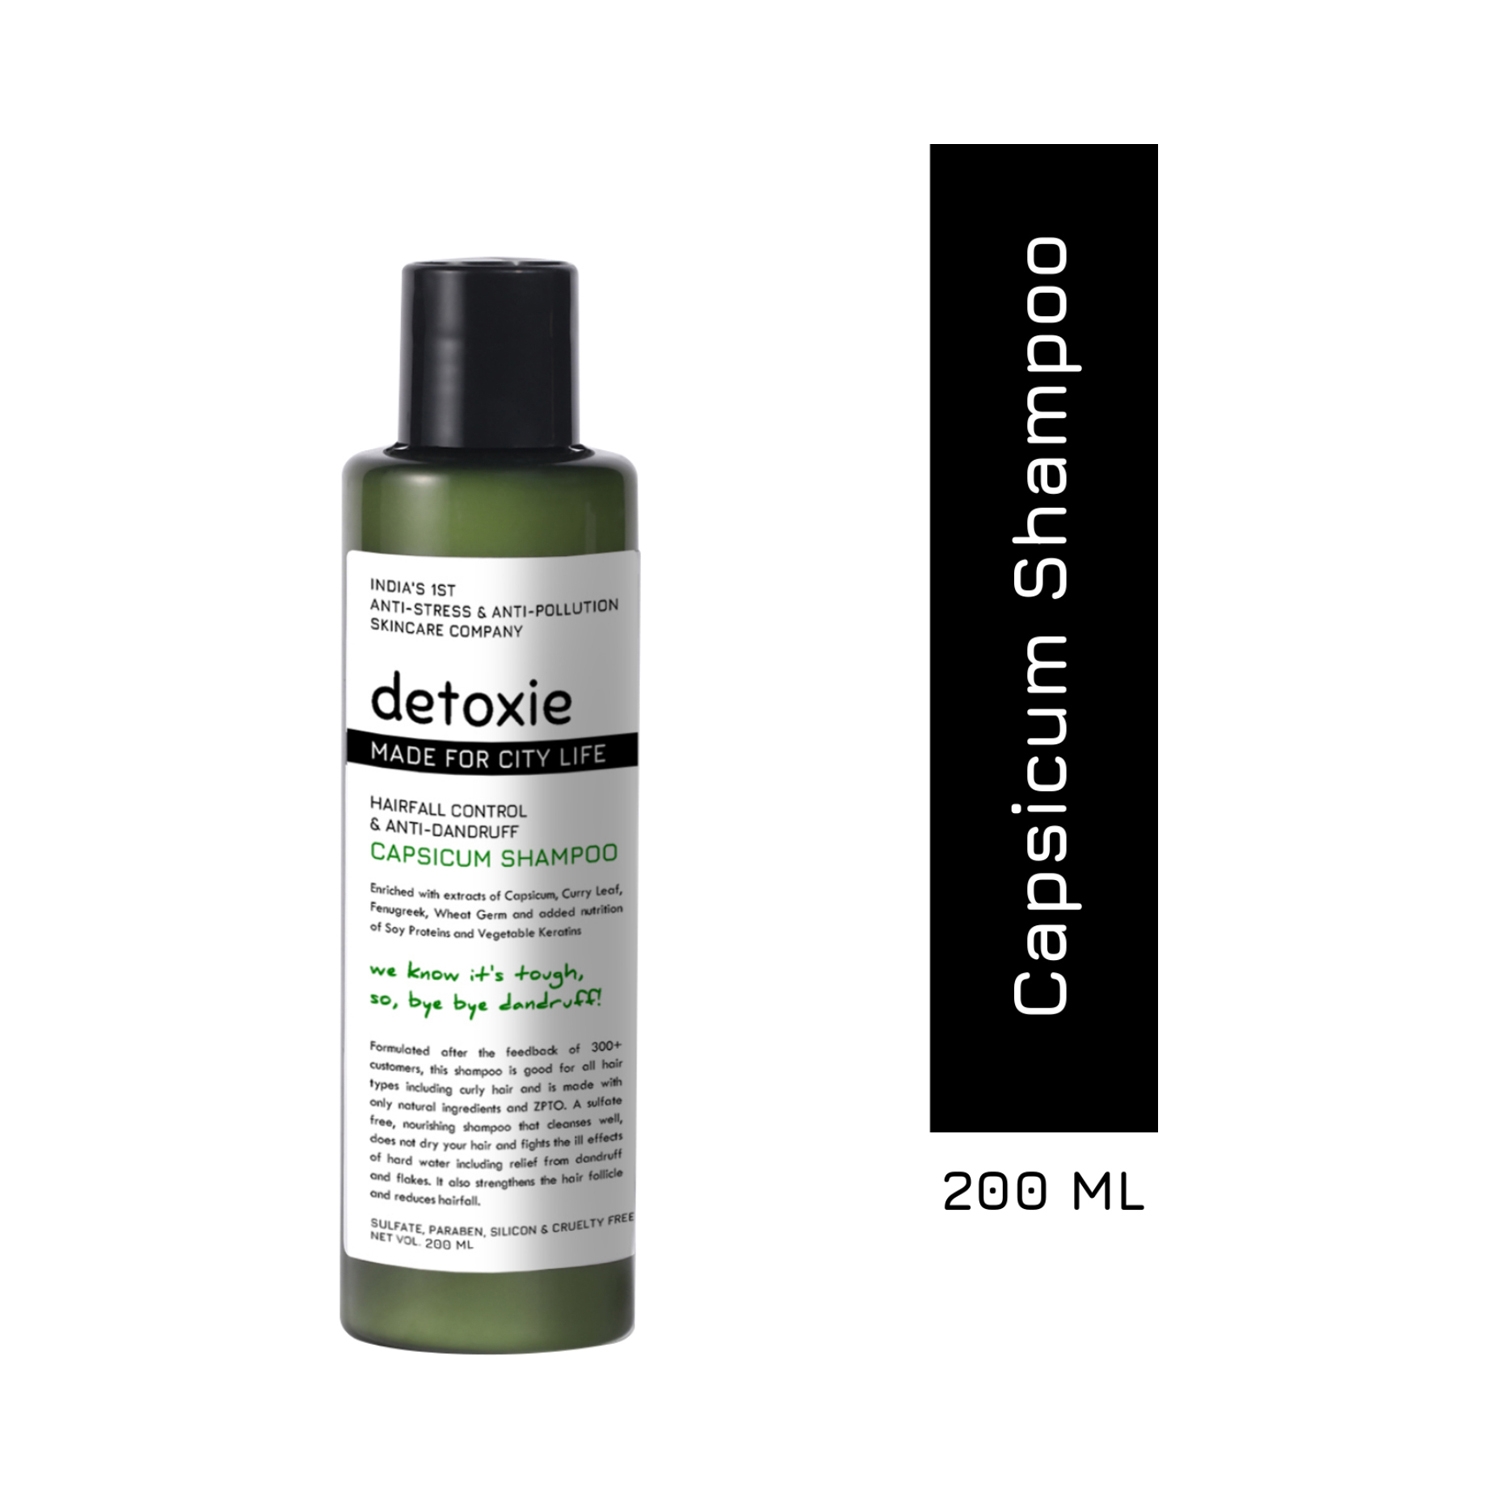 Detoxie | Detoxie Anti-Dandruff & Flake Relief Capsicum Shampoo (200ml)